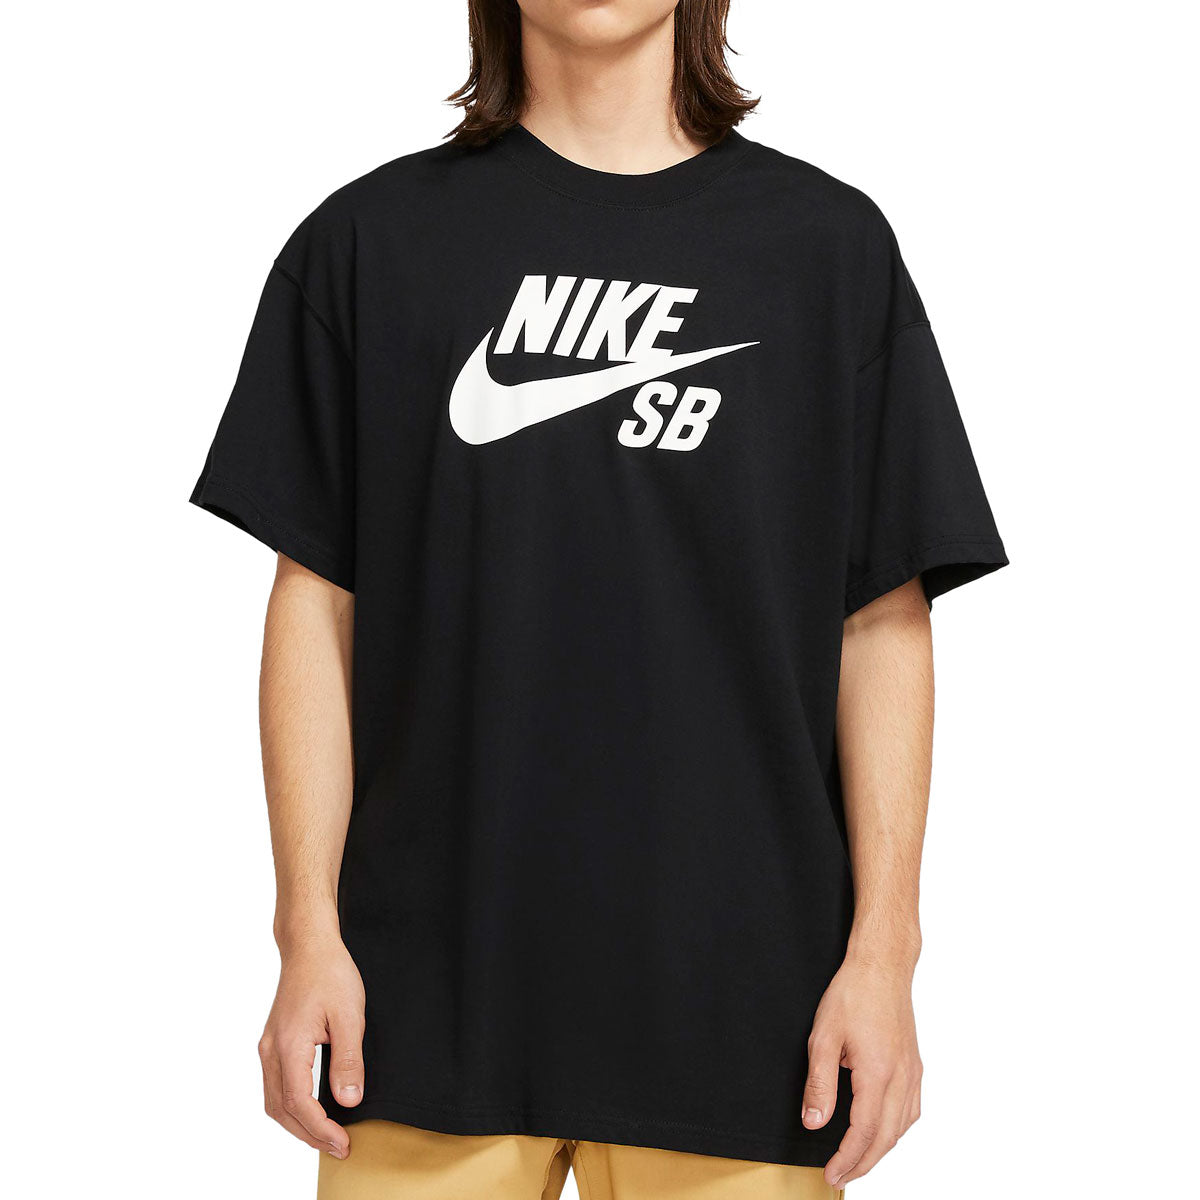 Nike SB Logo T-Shirt - Black/White image 1